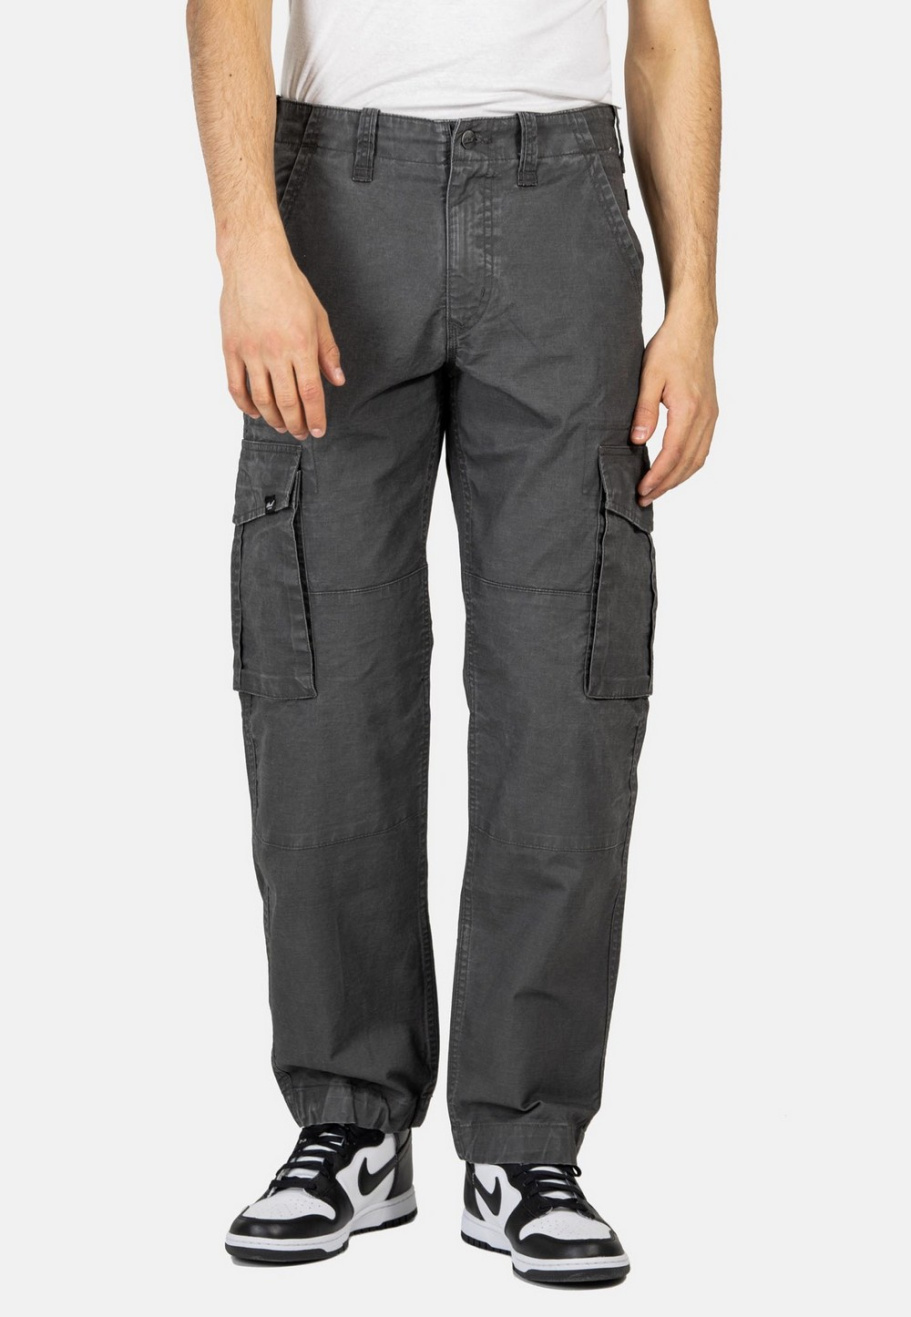 Reell Cargo pants-Dark grey   & isotkoot.com